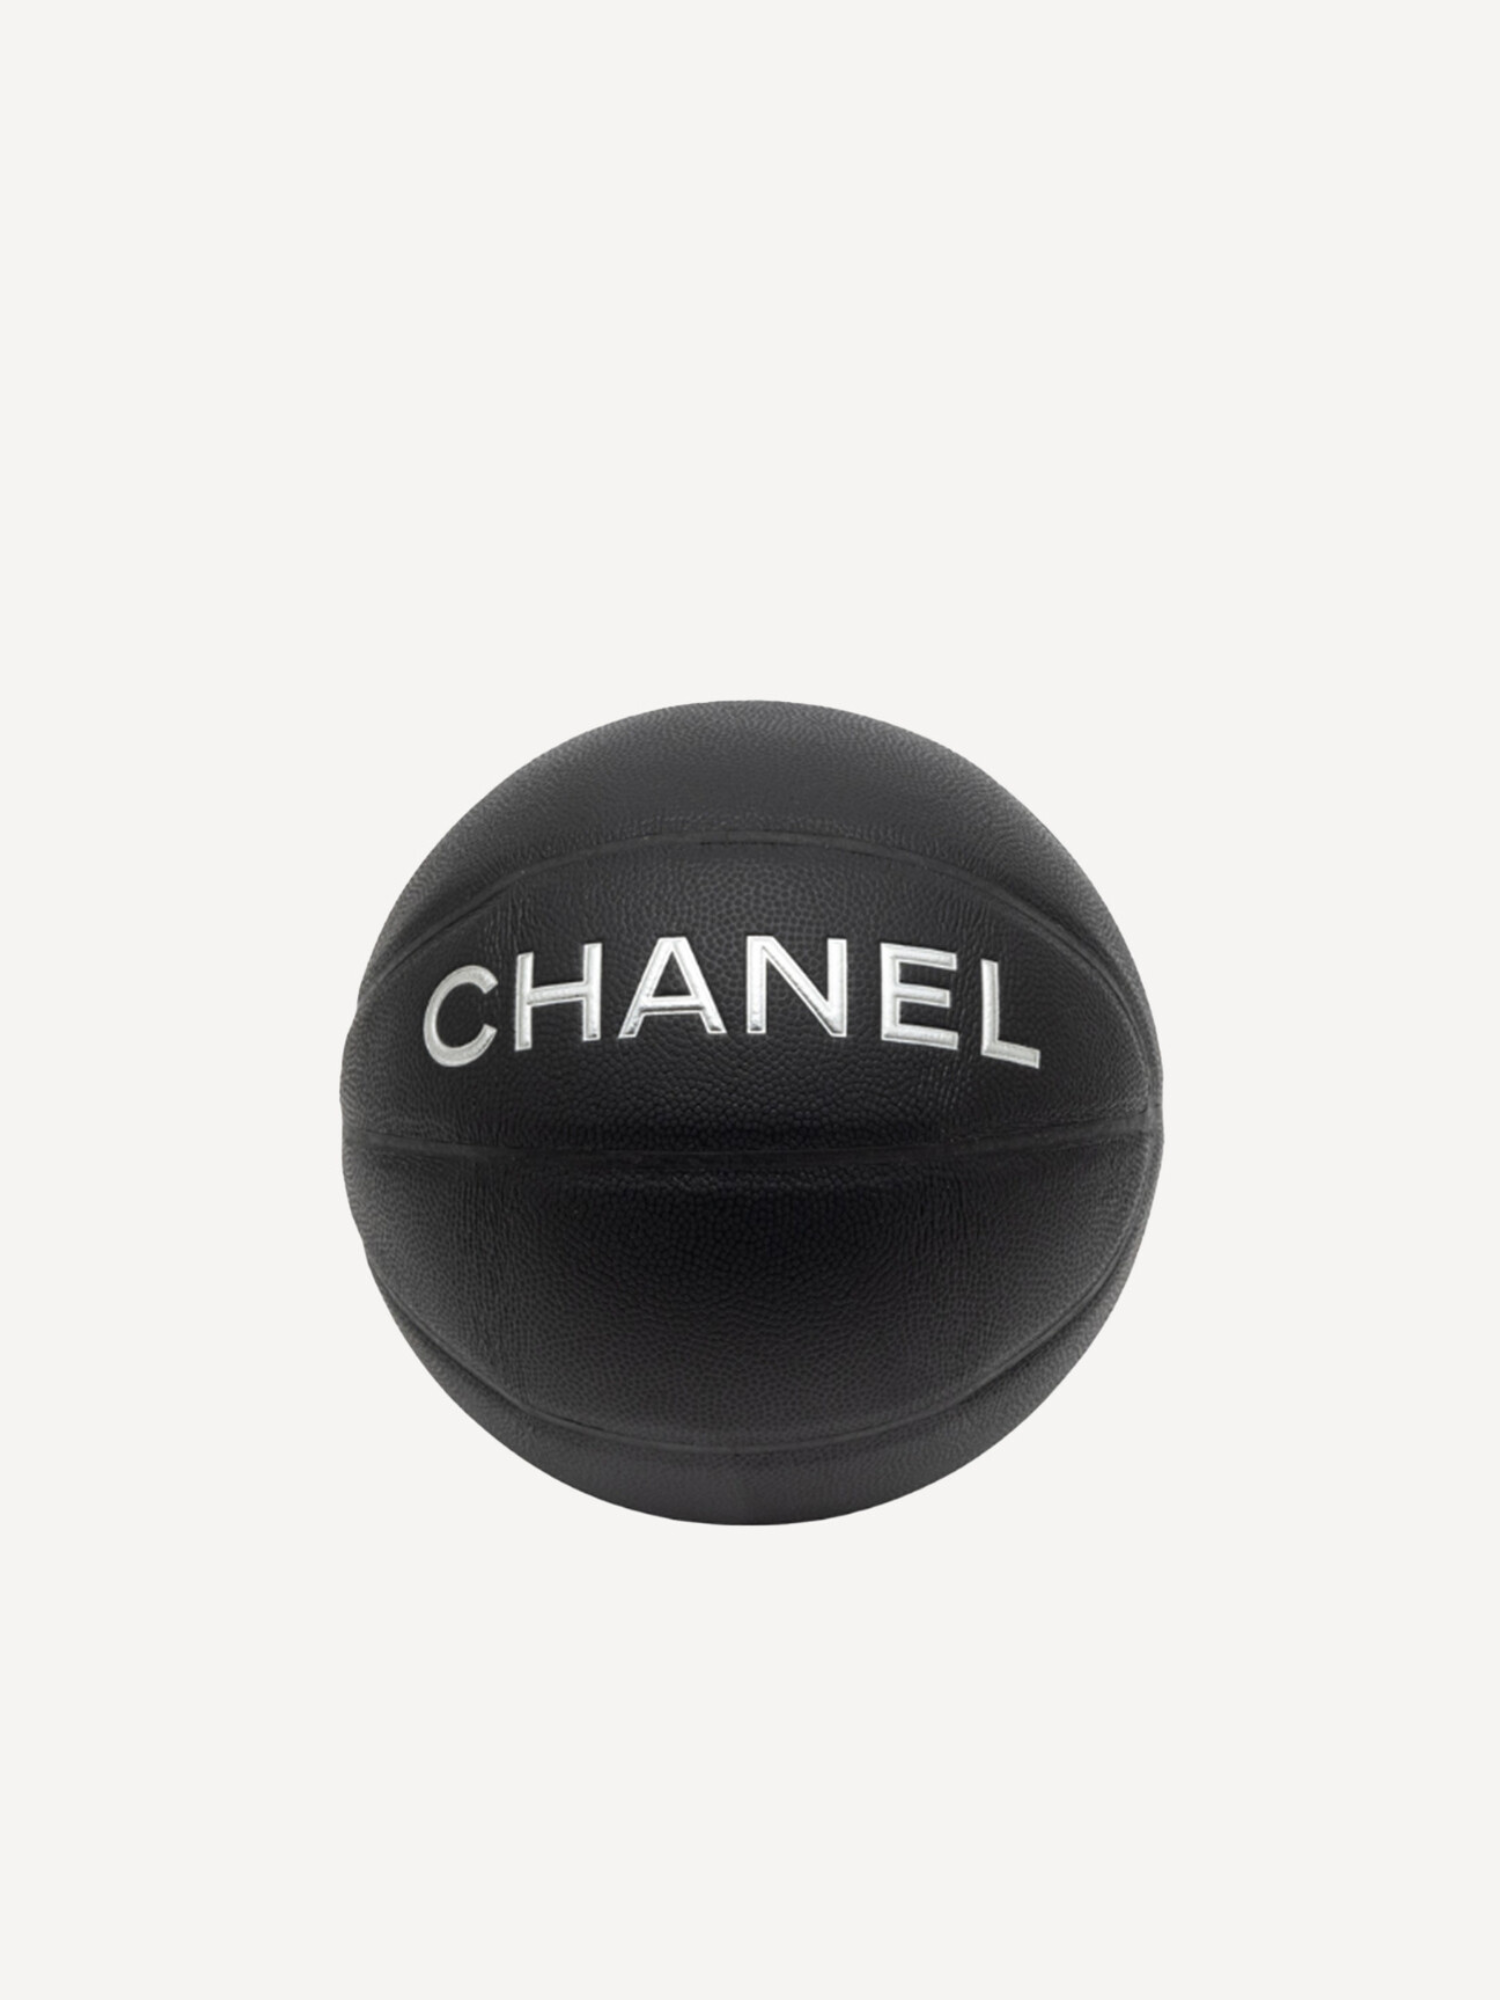 Black Chanel Basketball